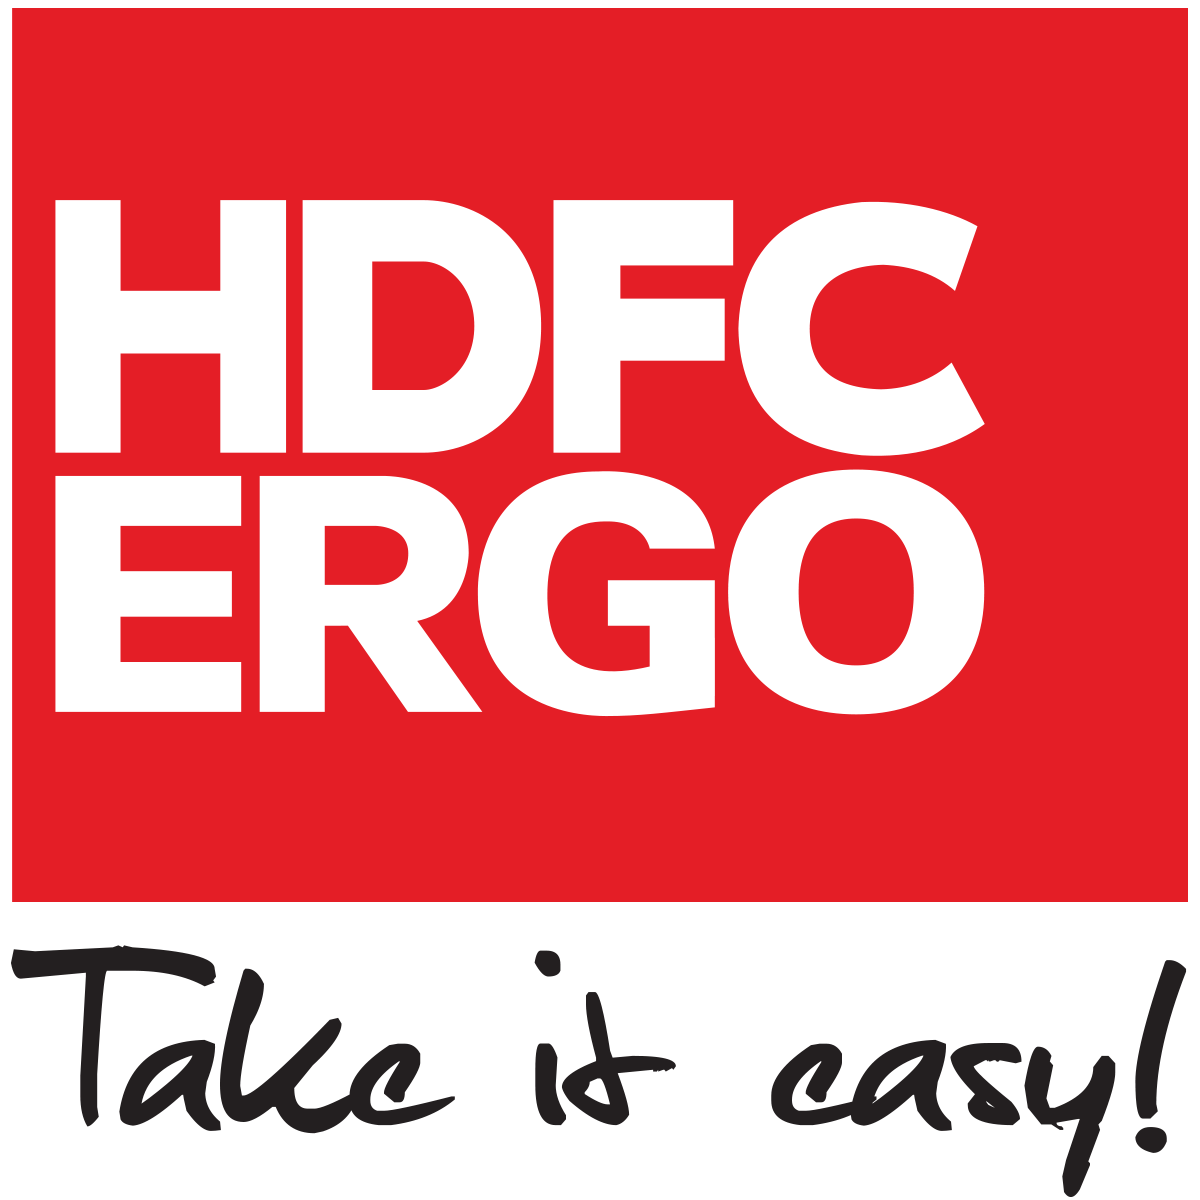 HDFC ERGO